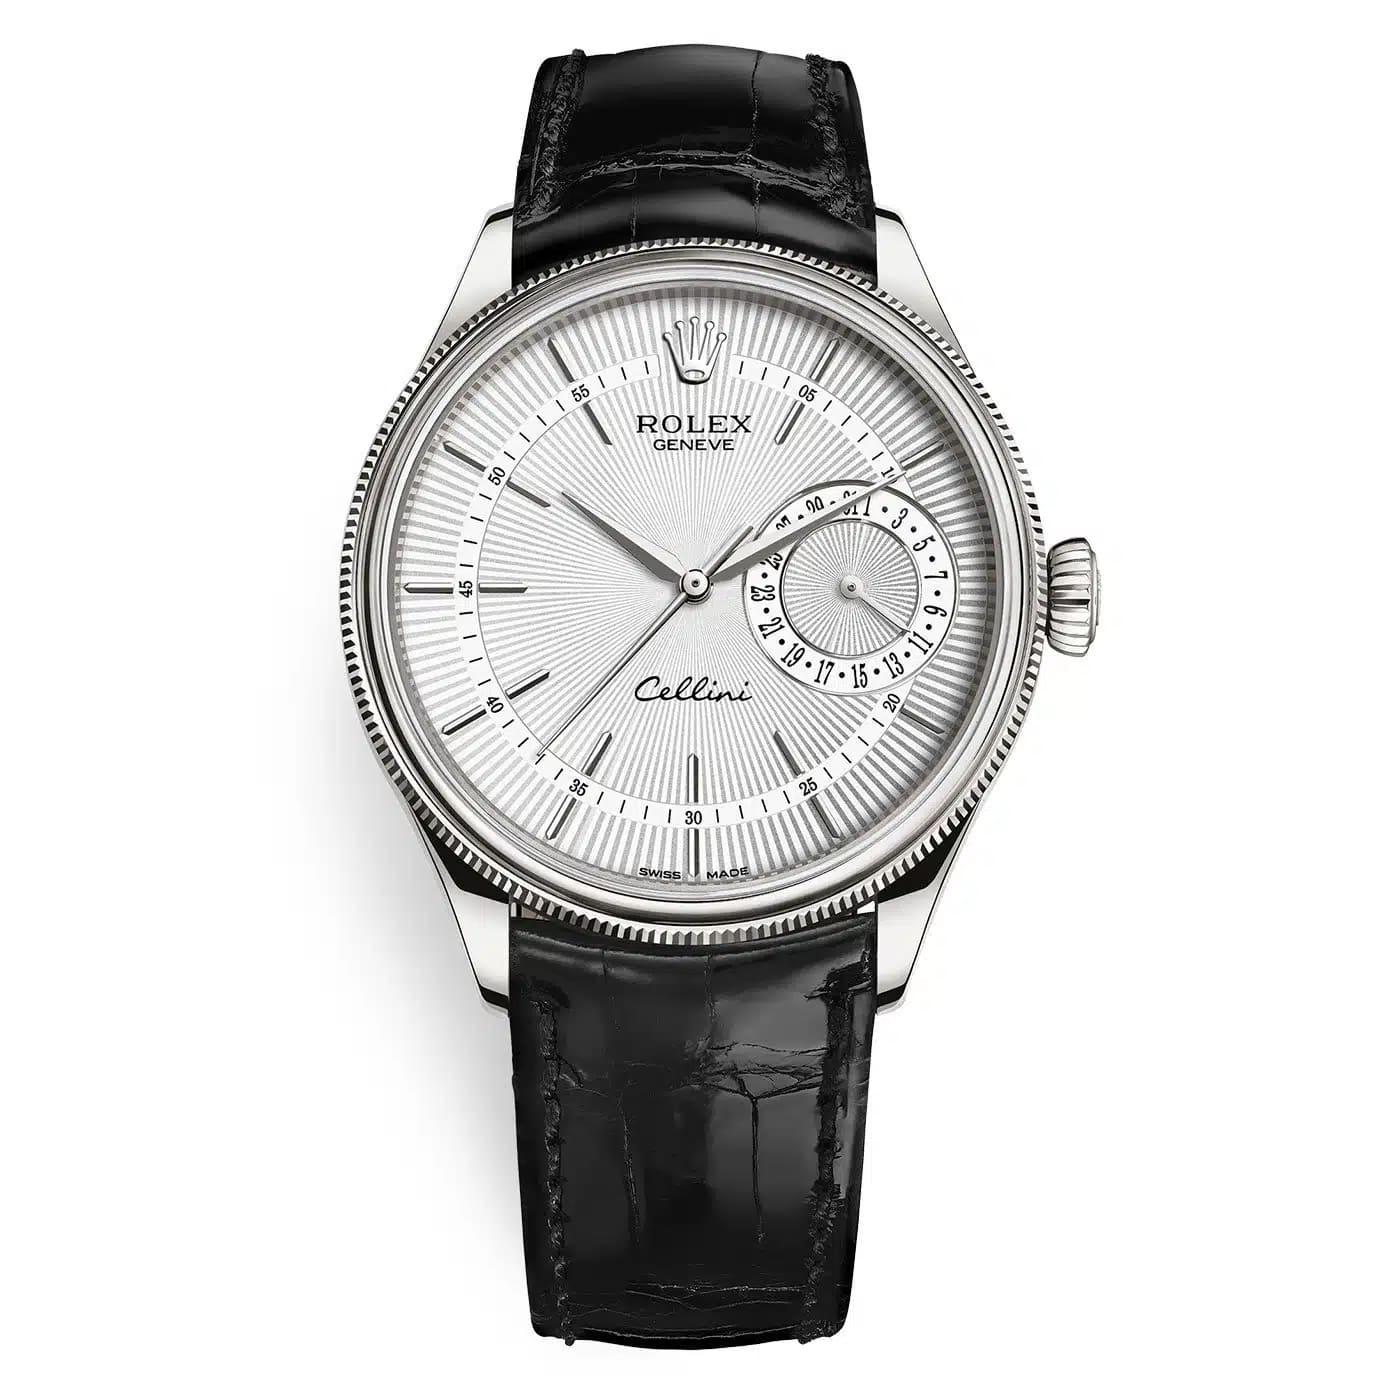 Đồng hồ Rolex Cellini 50519 Silver Dial mặt số màu bạc